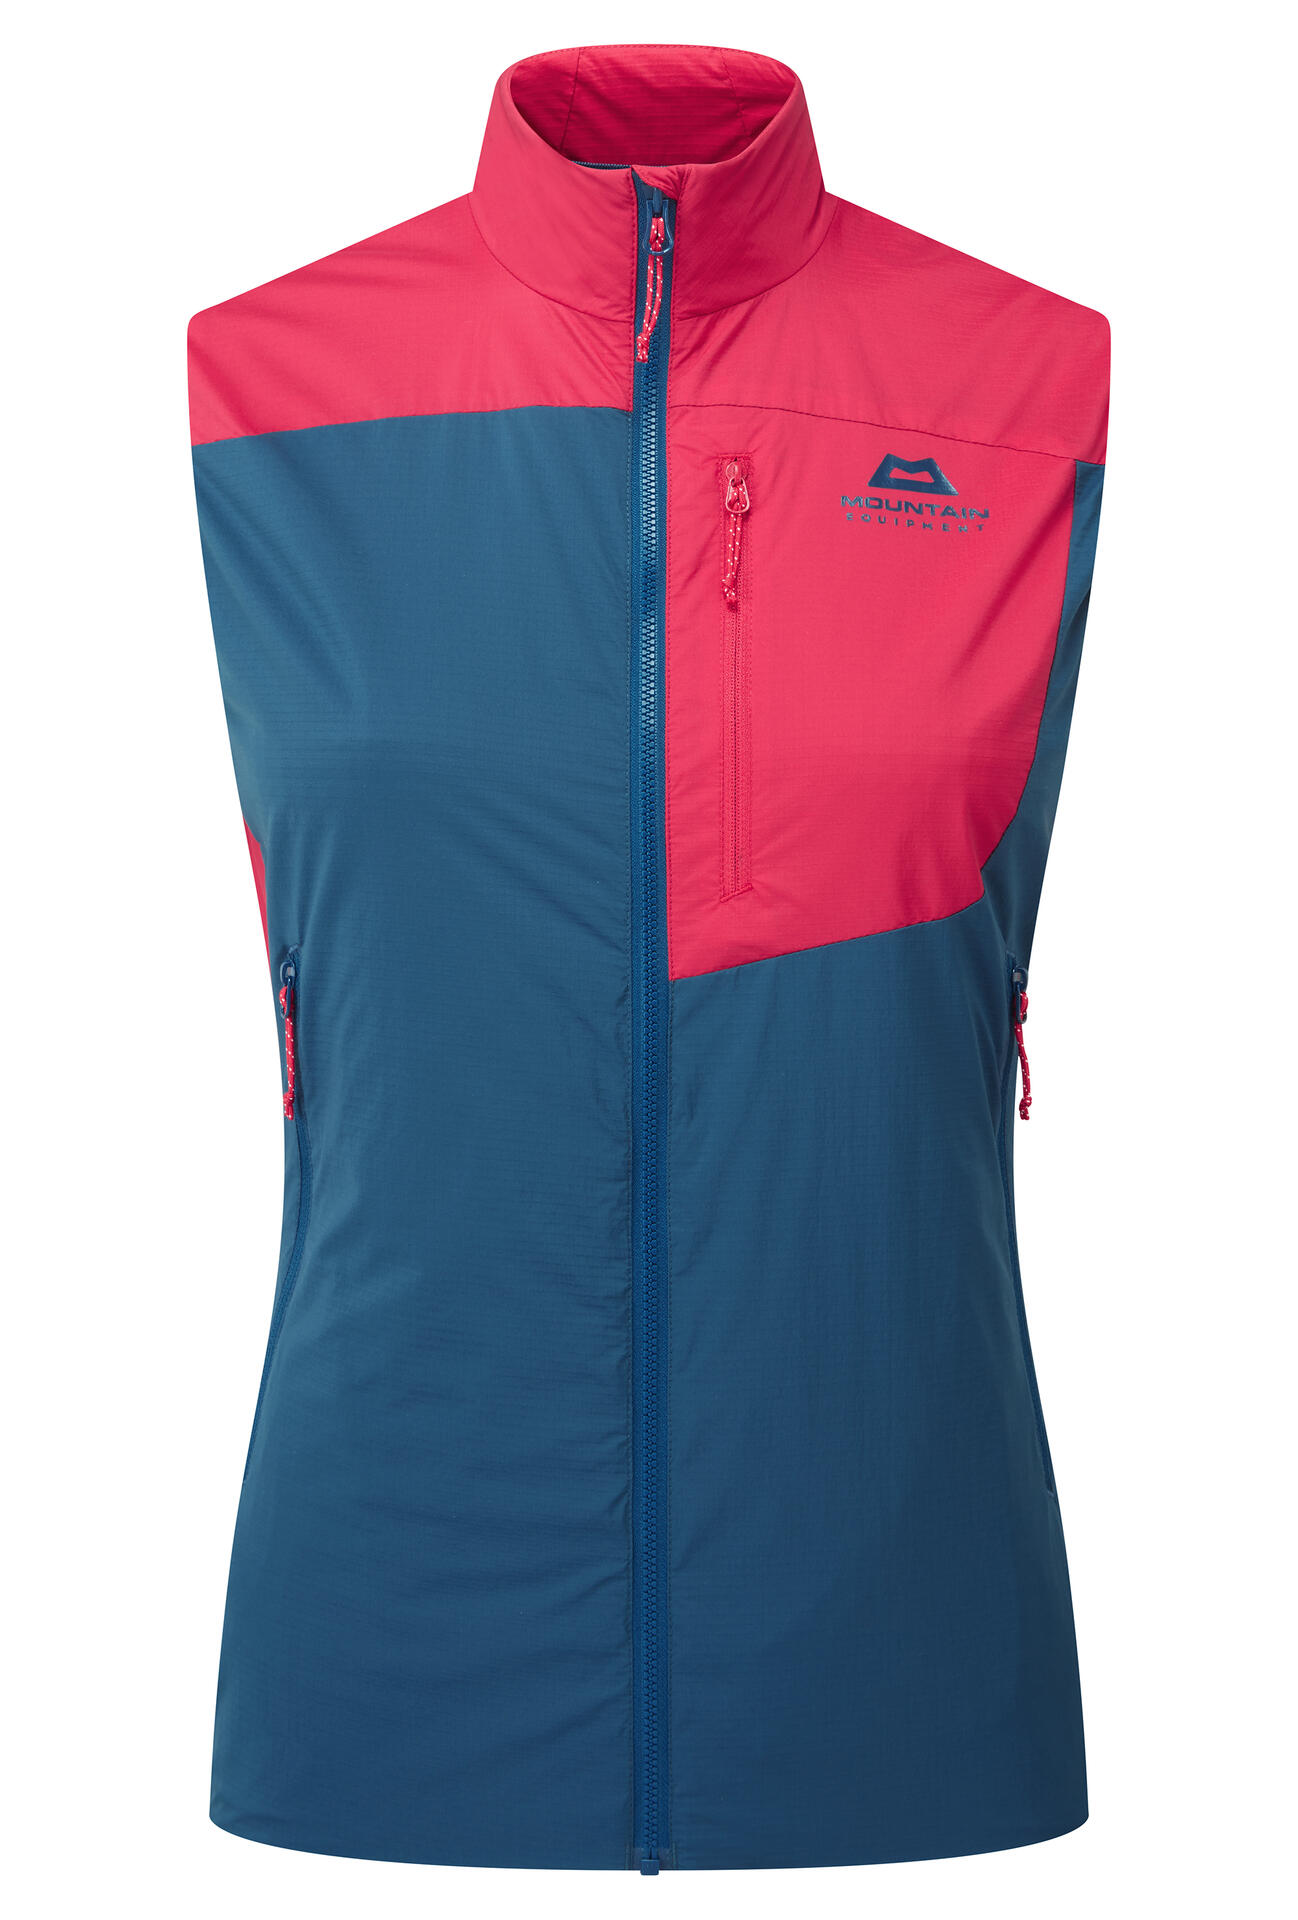 Mountain Equipment Aerotherm Vest Women'S Barva: Majolica/Capsicum, Velikost: M